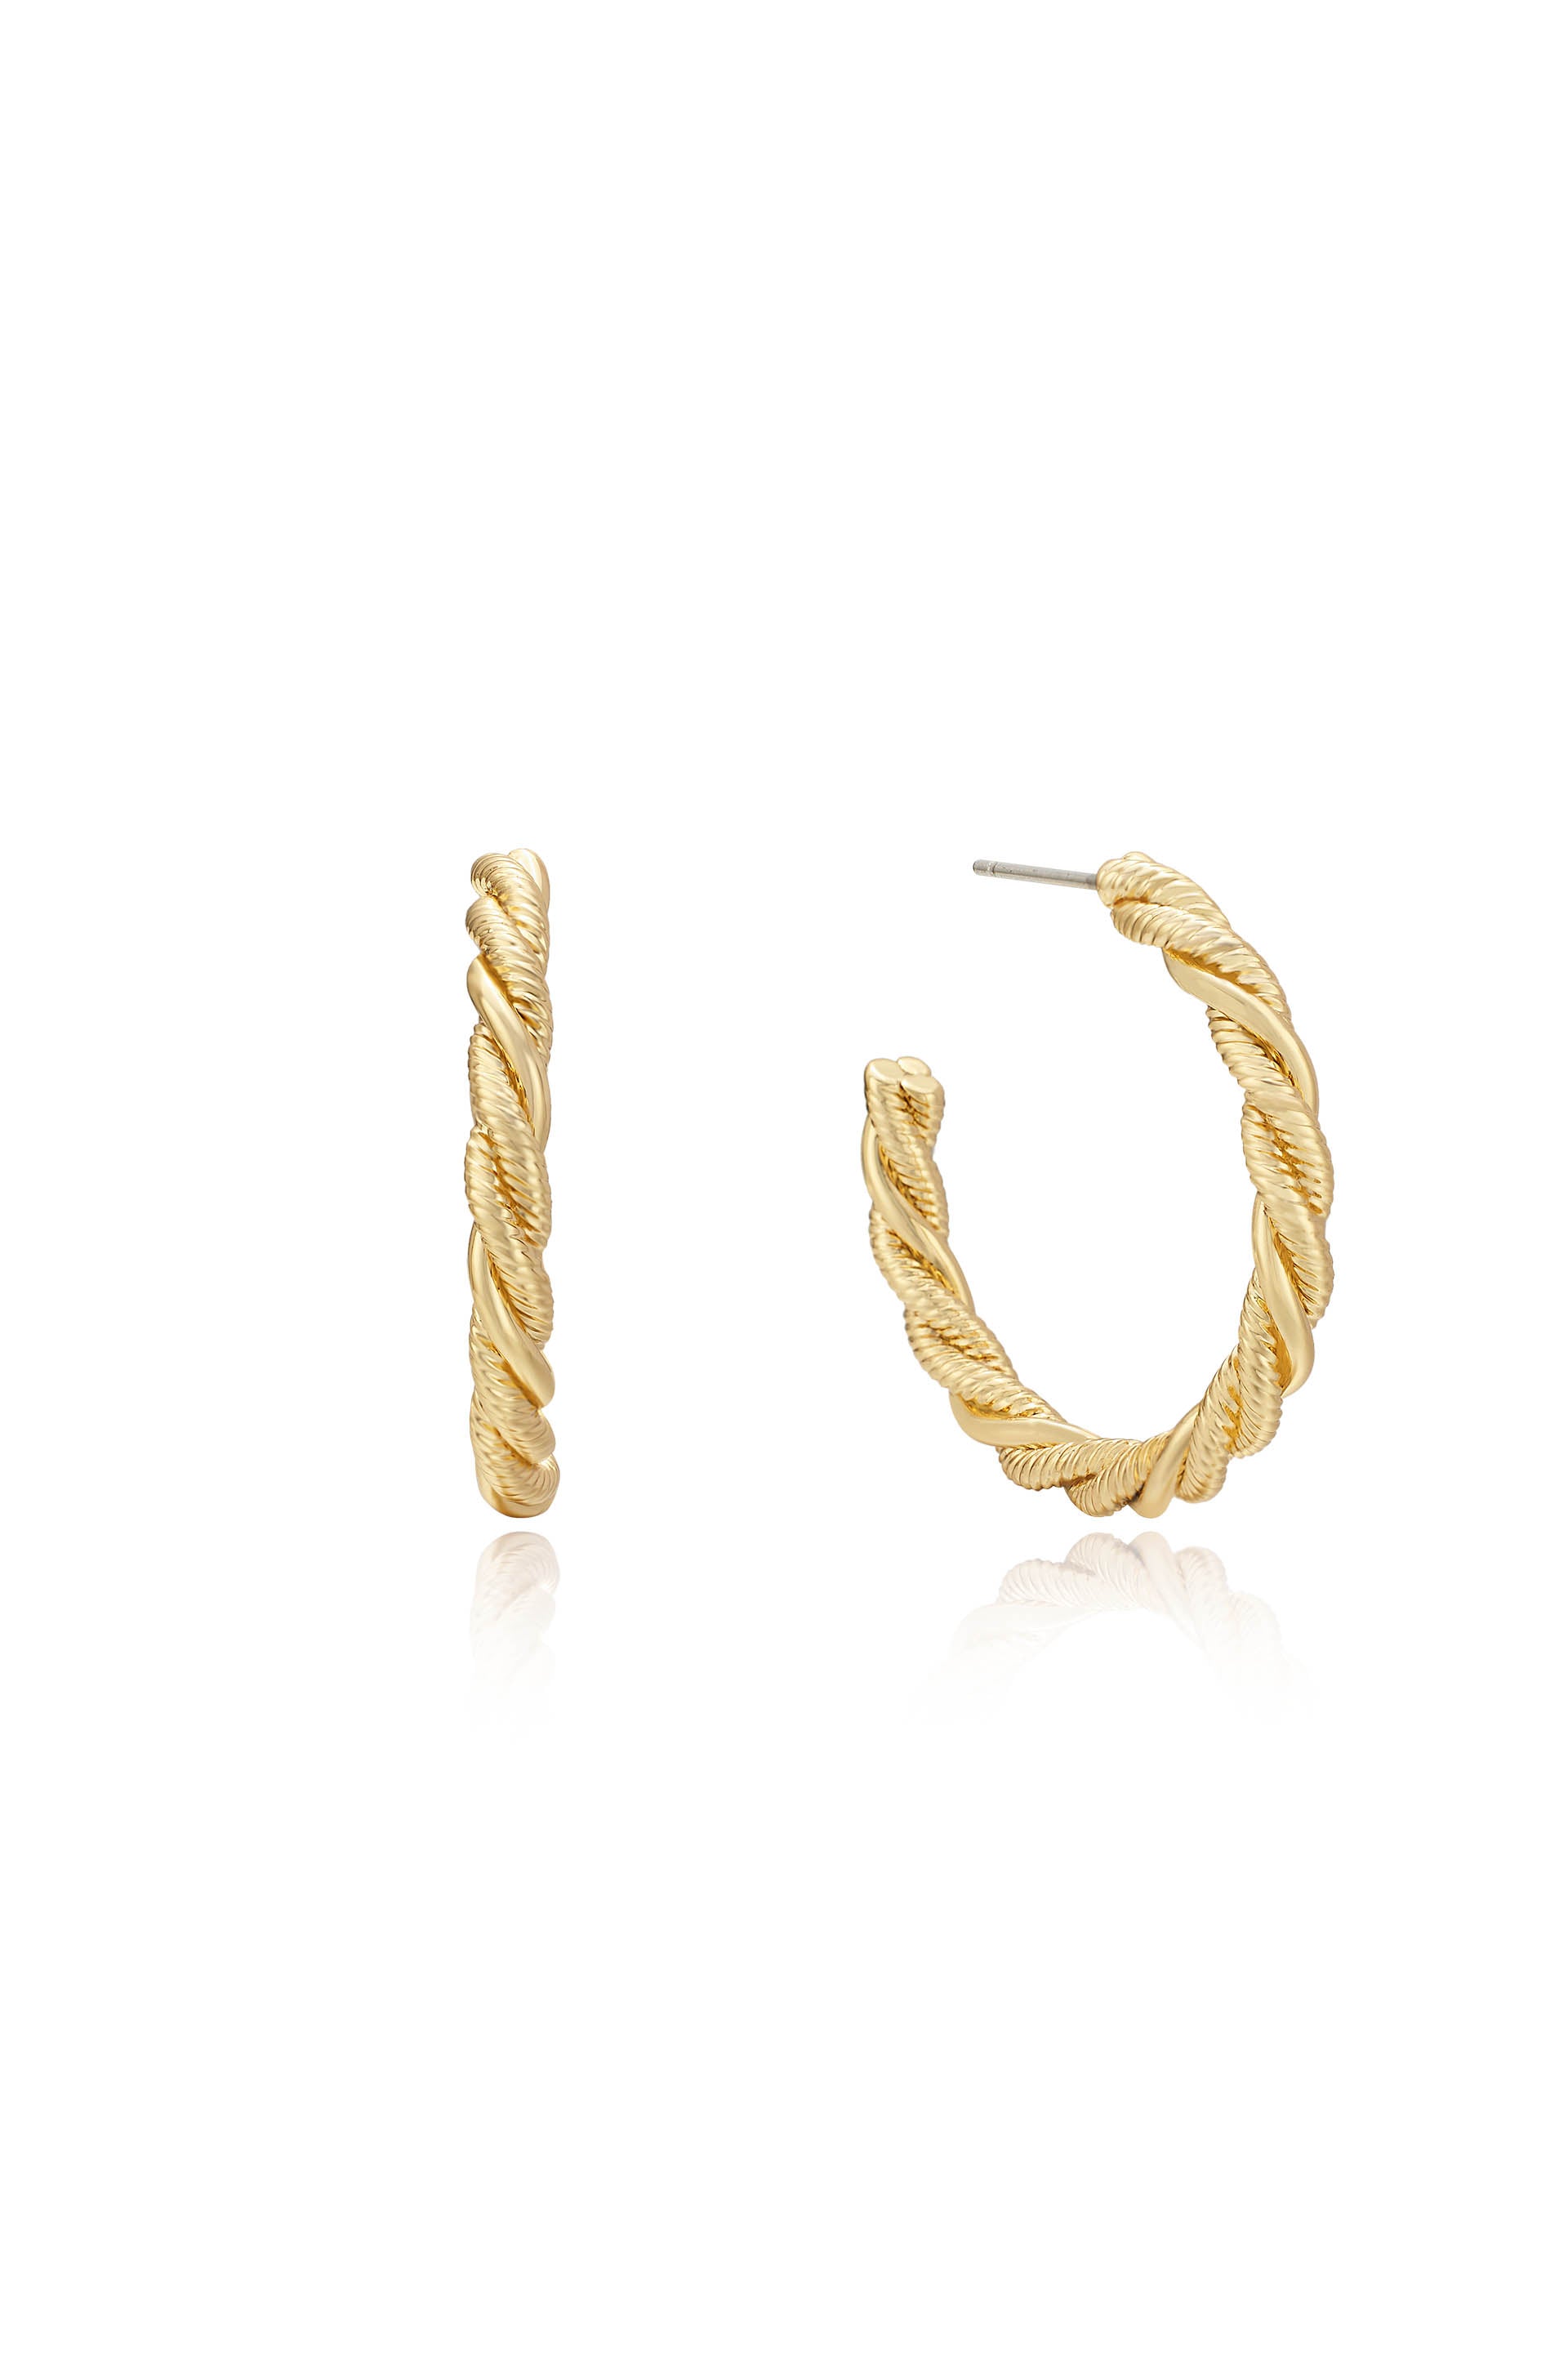 Brass Padlock Earrings 18K Gold Plated Jewelry Very Stylish